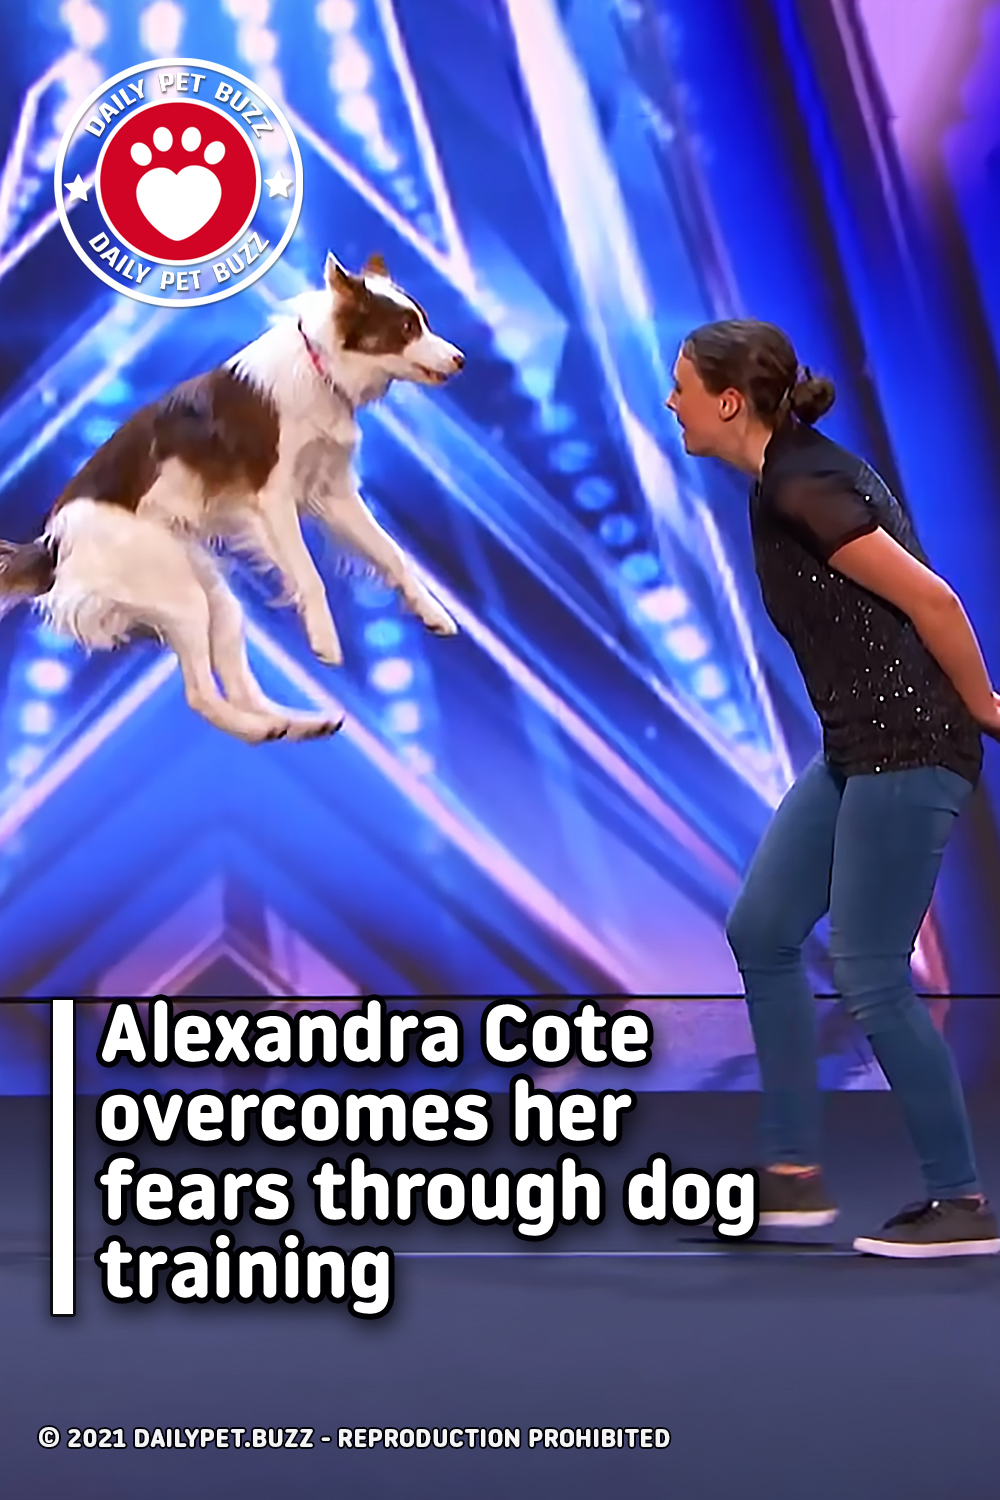 Alexandra Cote overcomes her fears through dog training